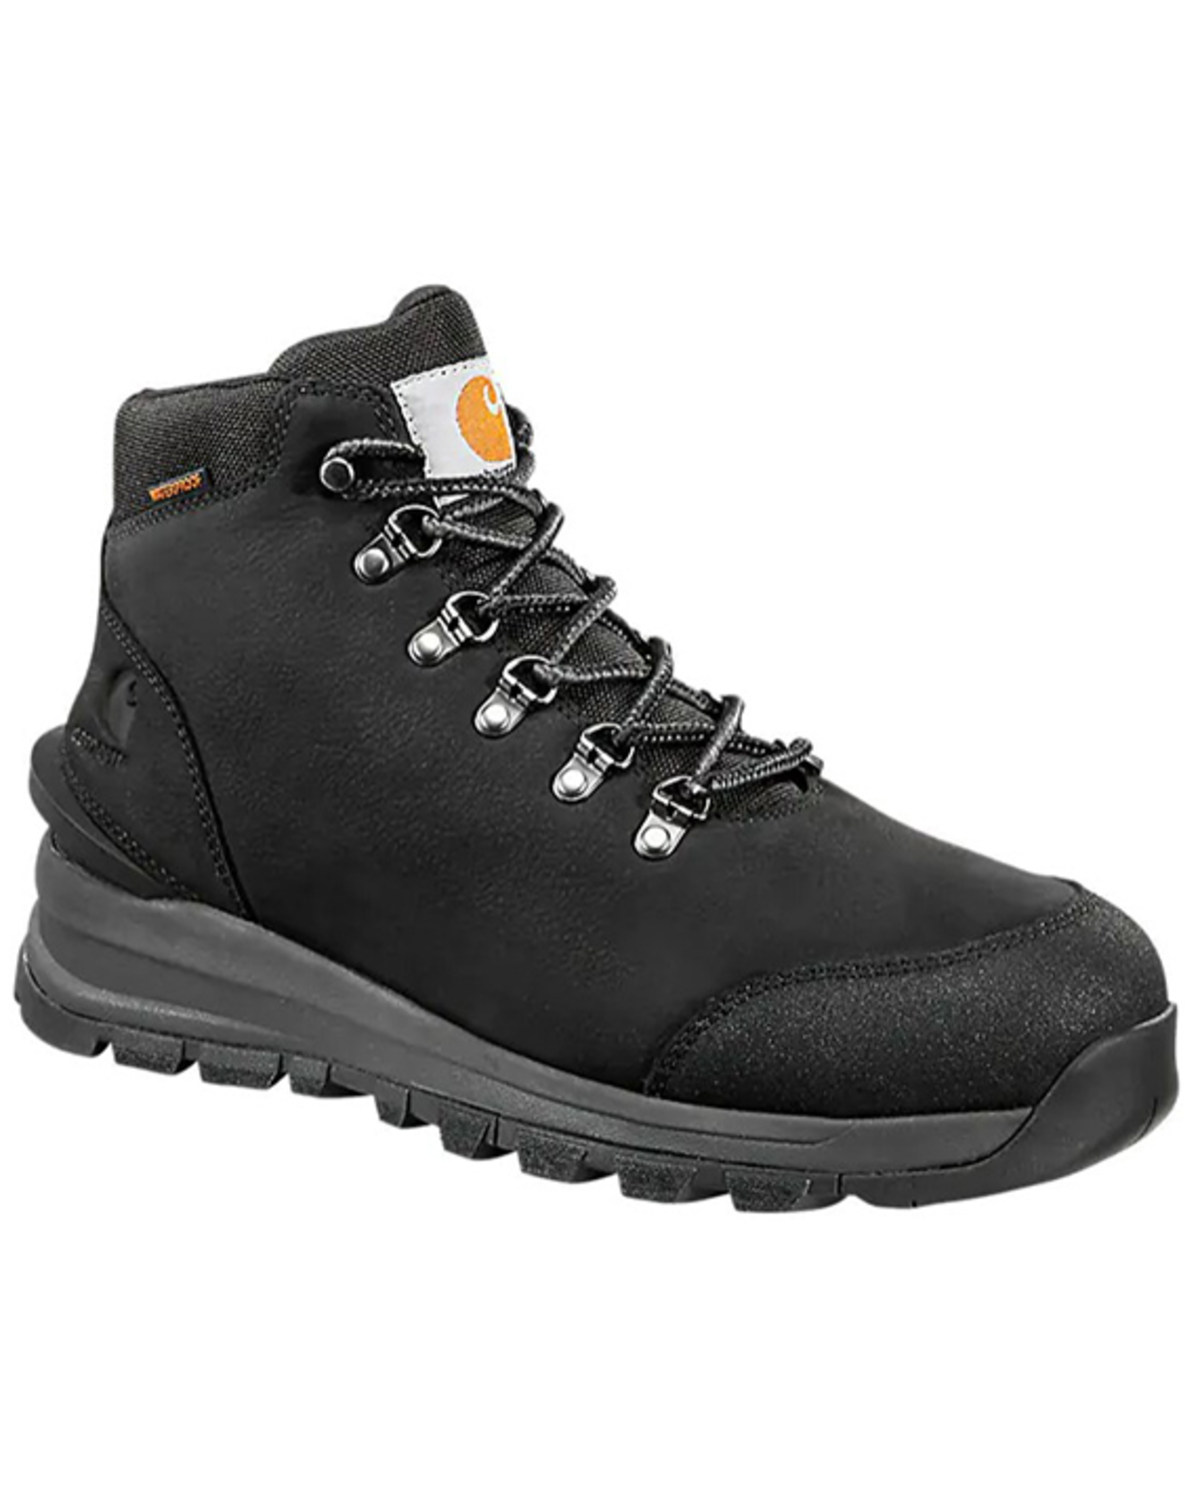 Carhartt Men's Gilmore 5" Hiker Work Boot - Soft Toe